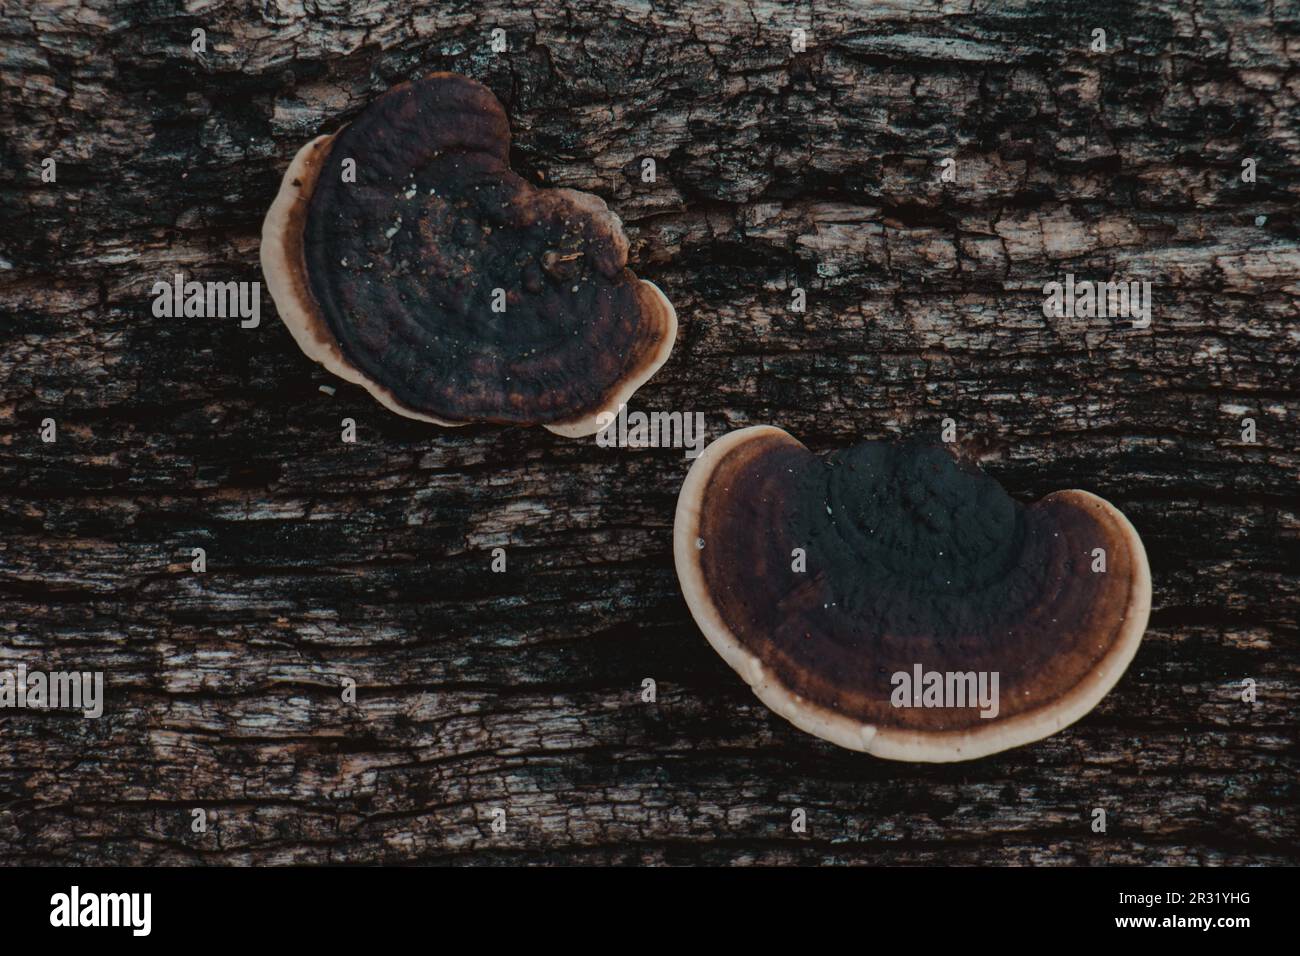 mushrooms growing in wood Stock Photo